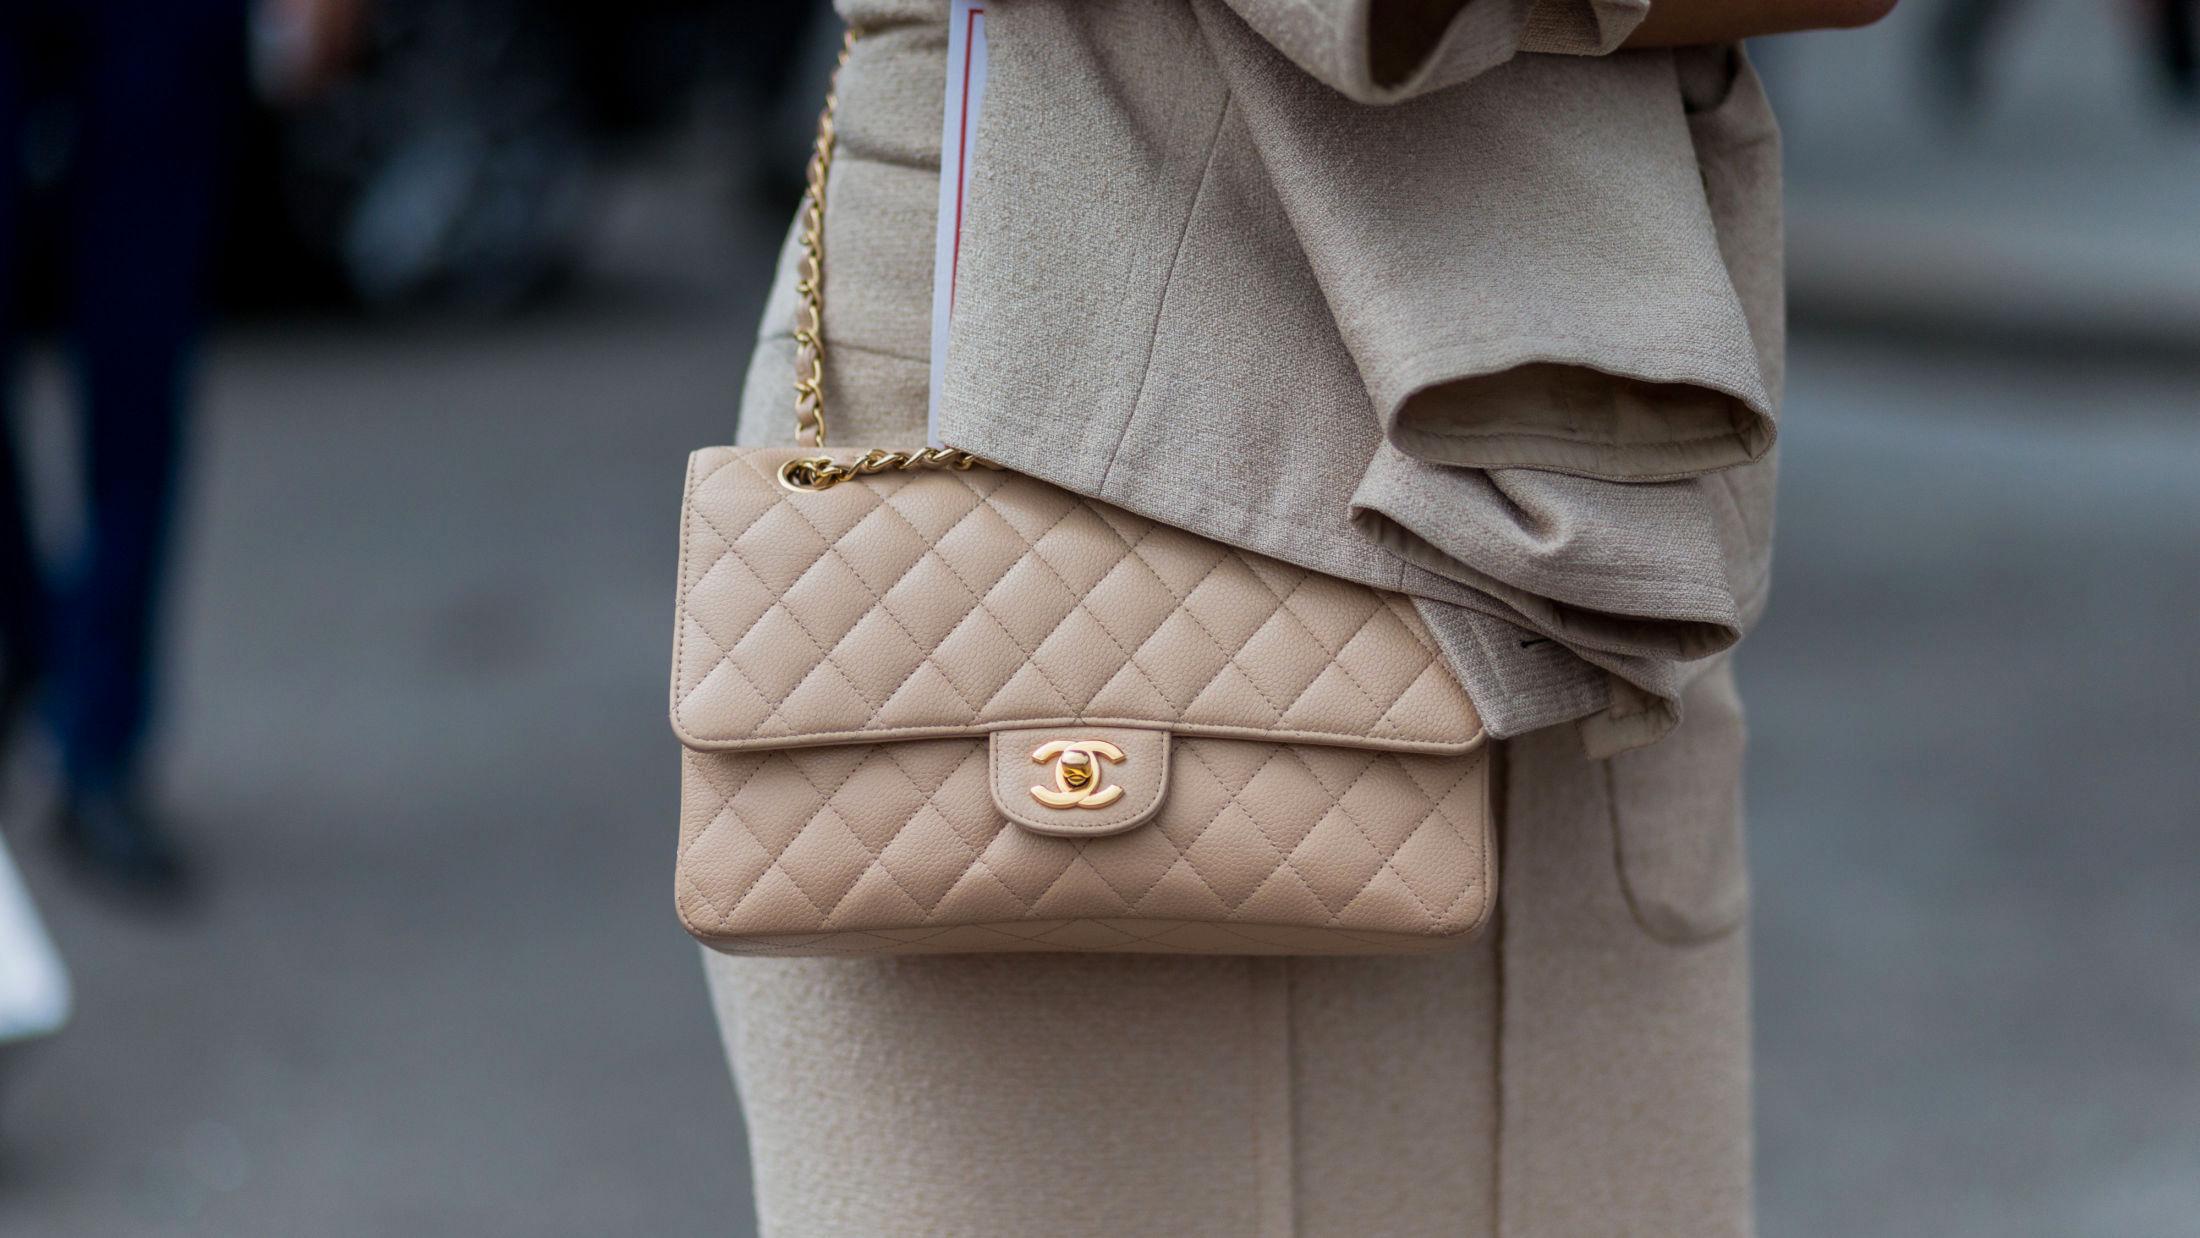 BEIGE KLASSIKER: Chanel 2.55 er en favoritt hos kvinner i alle aldre. Foto: Getty Images